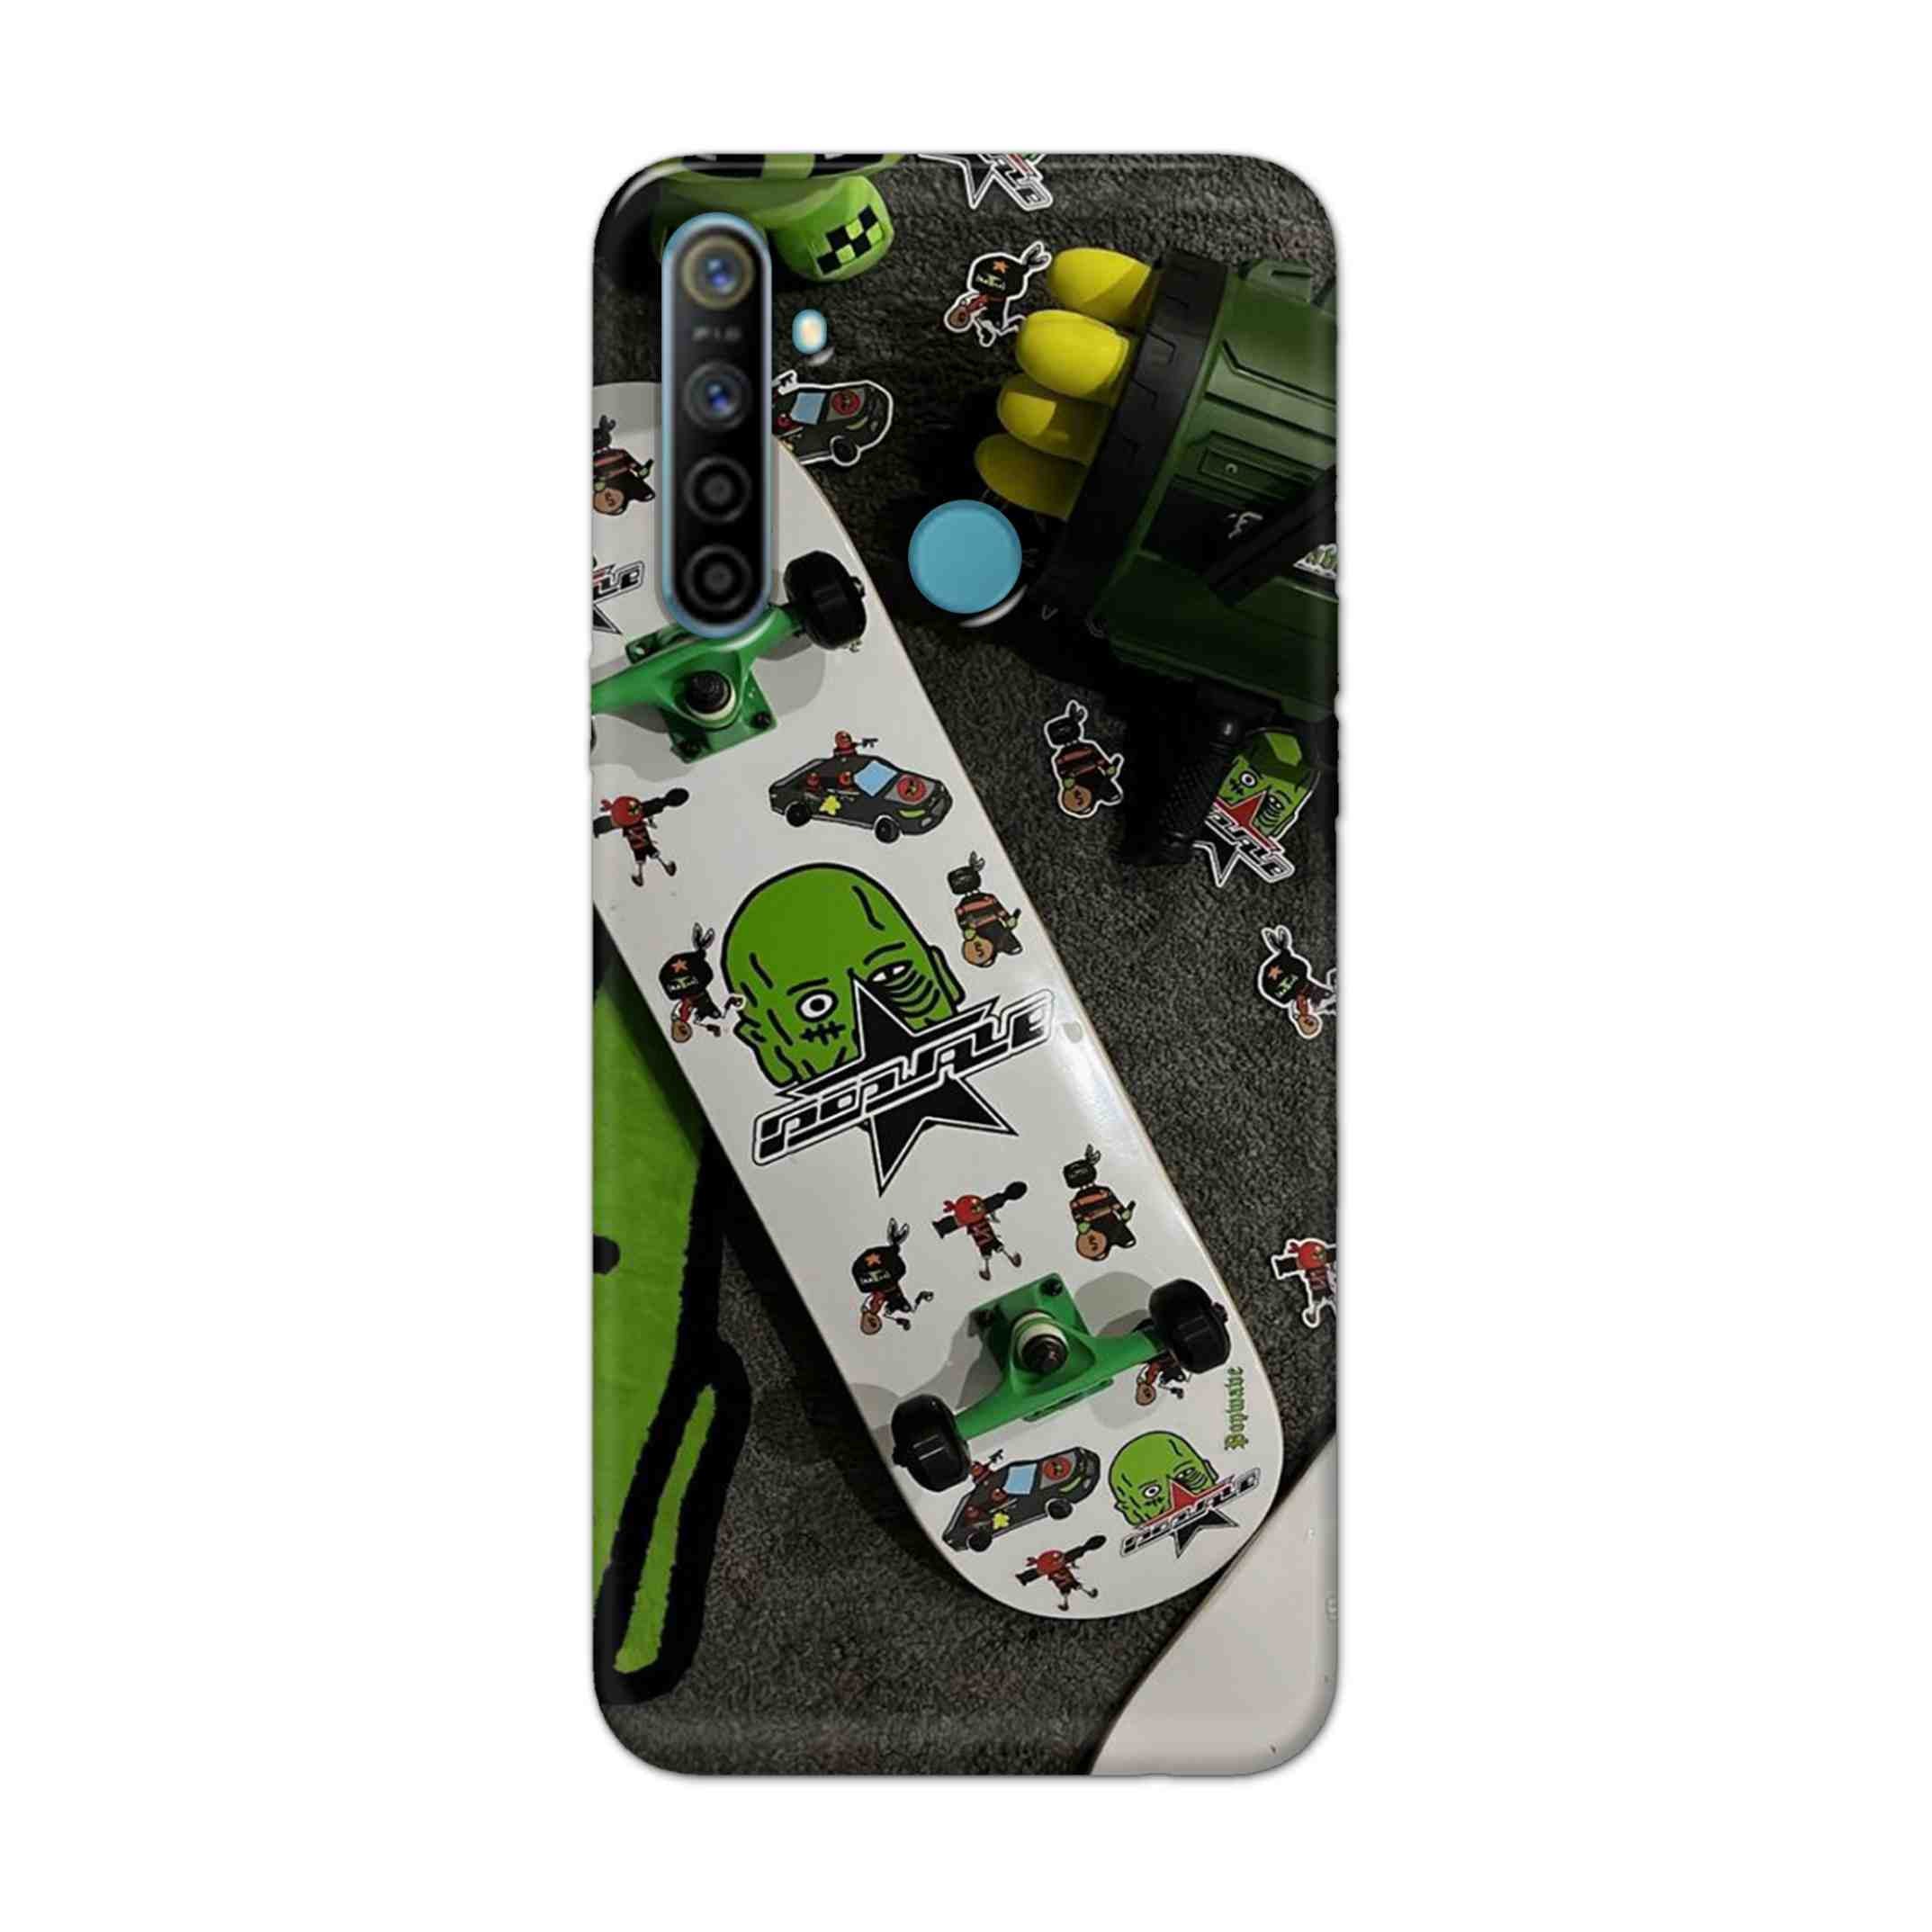 Buy Hulk Skateboard Hard Back Mobile Phone Case Cover For Realme 5i Online